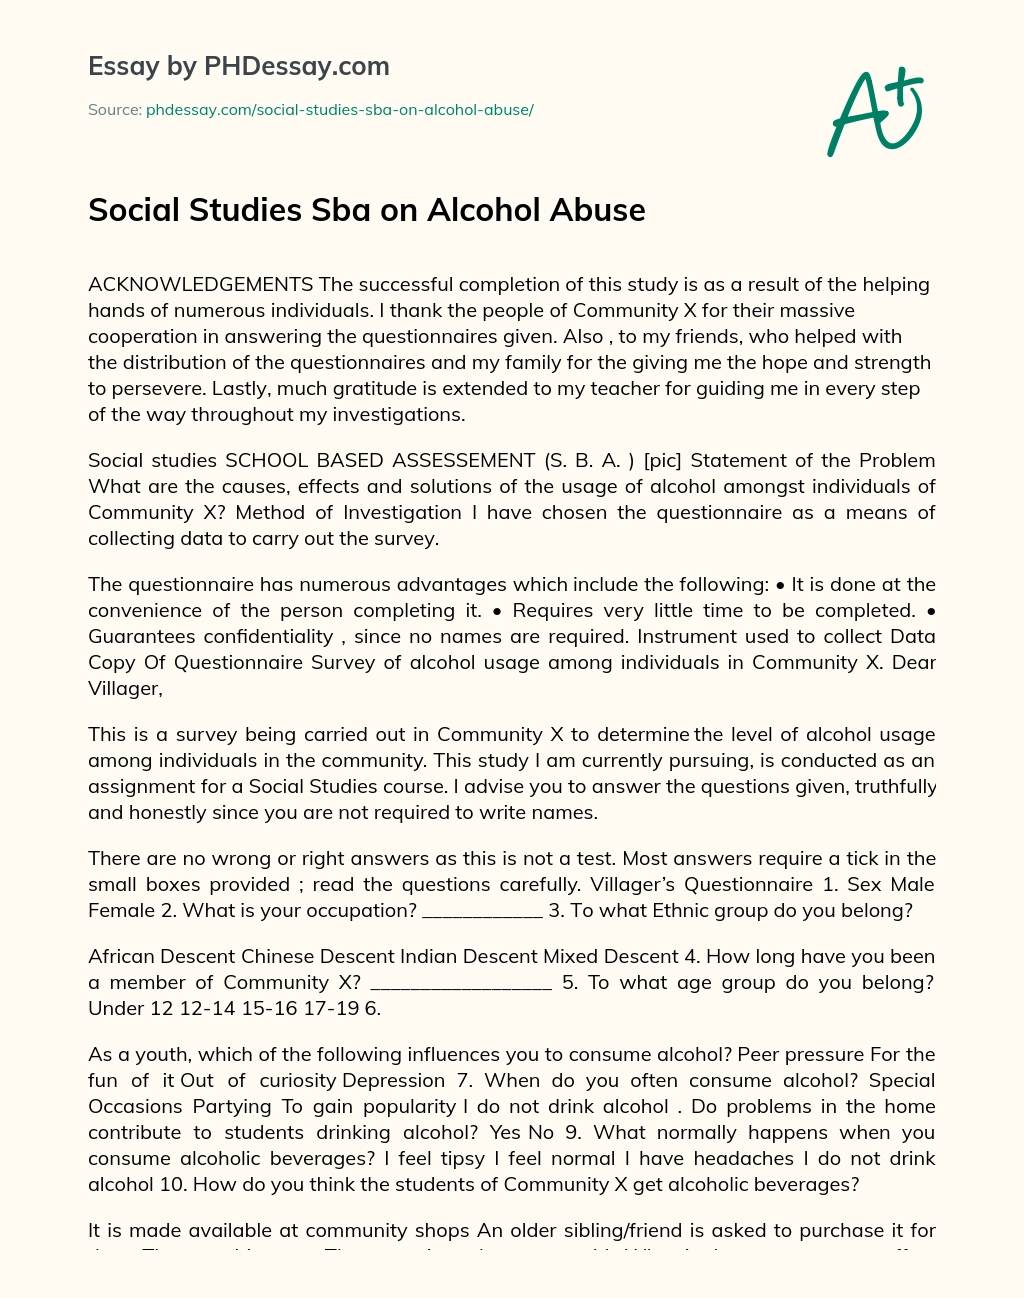 Social Studies Sba on Alcohol Abuse essay